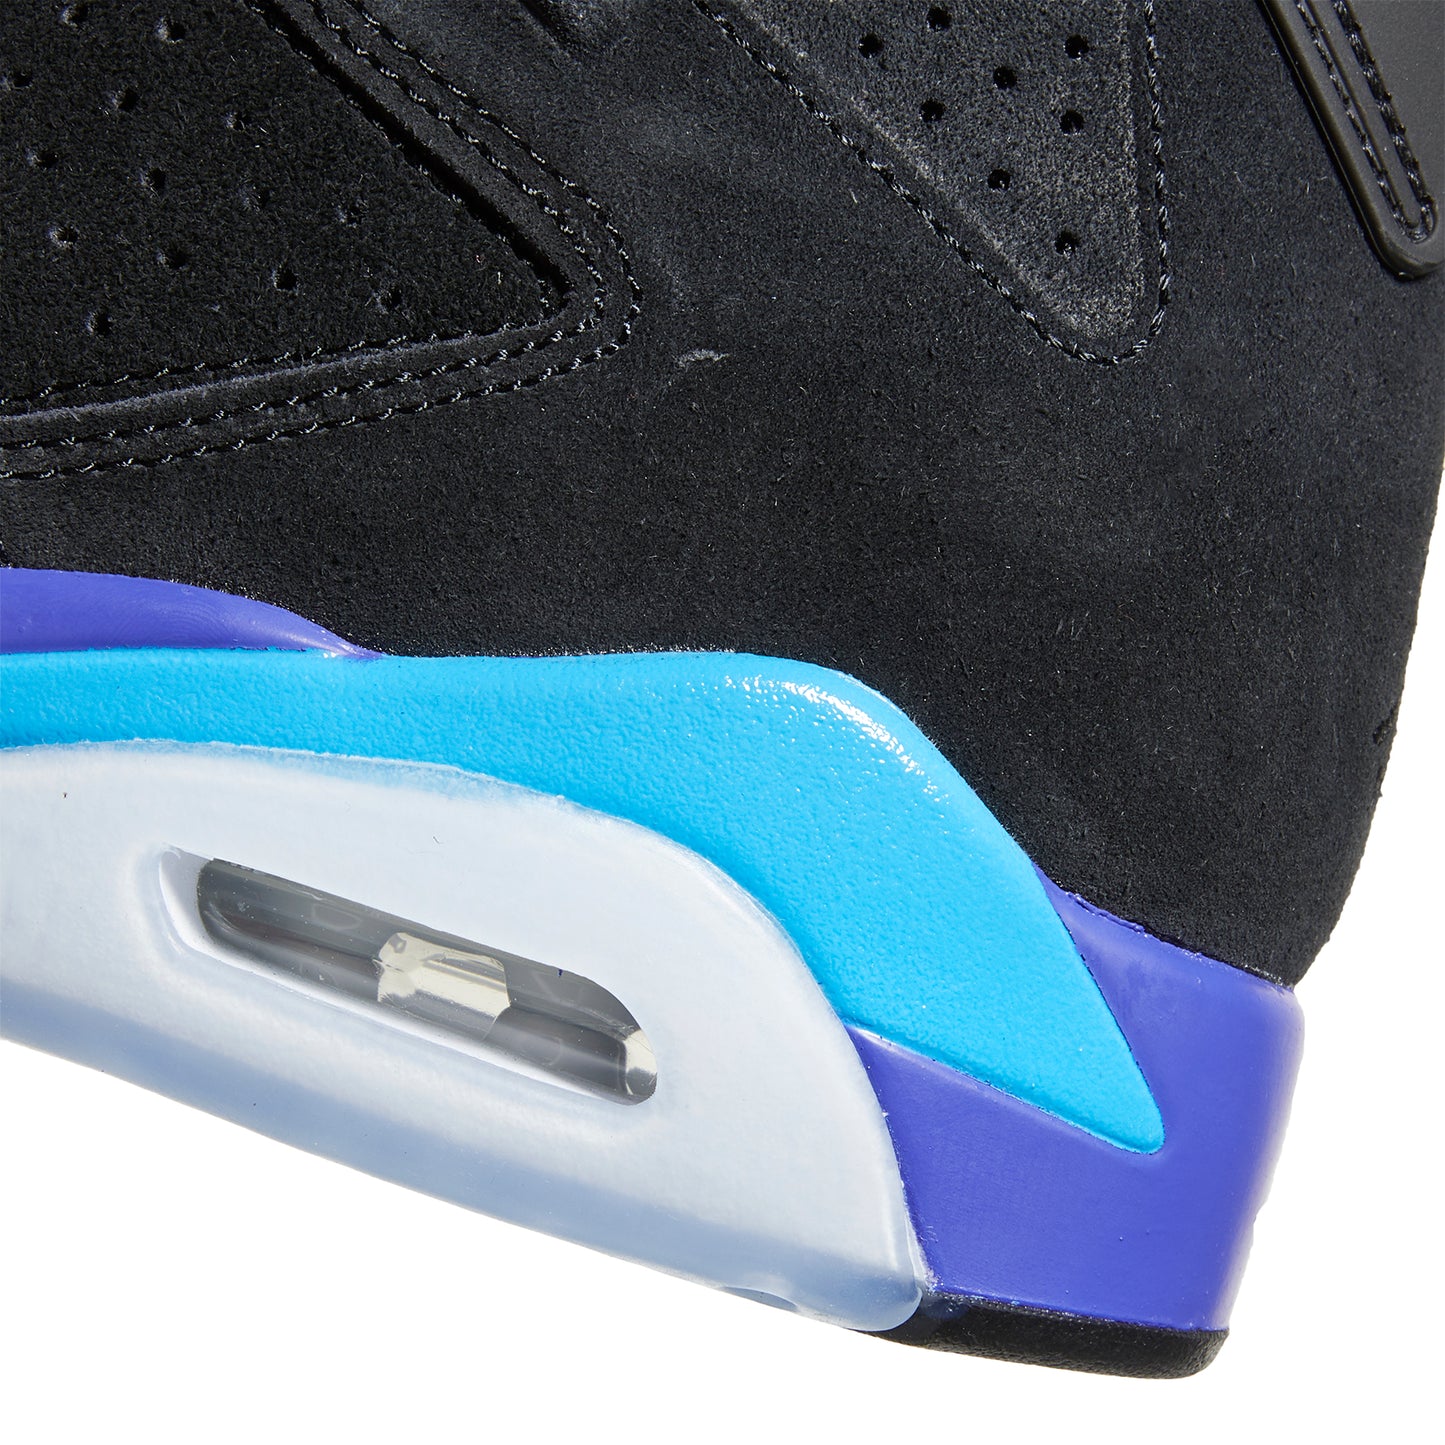 Nike Air Jordan 6 Retro (Black/Bright Concord/Aquatone)